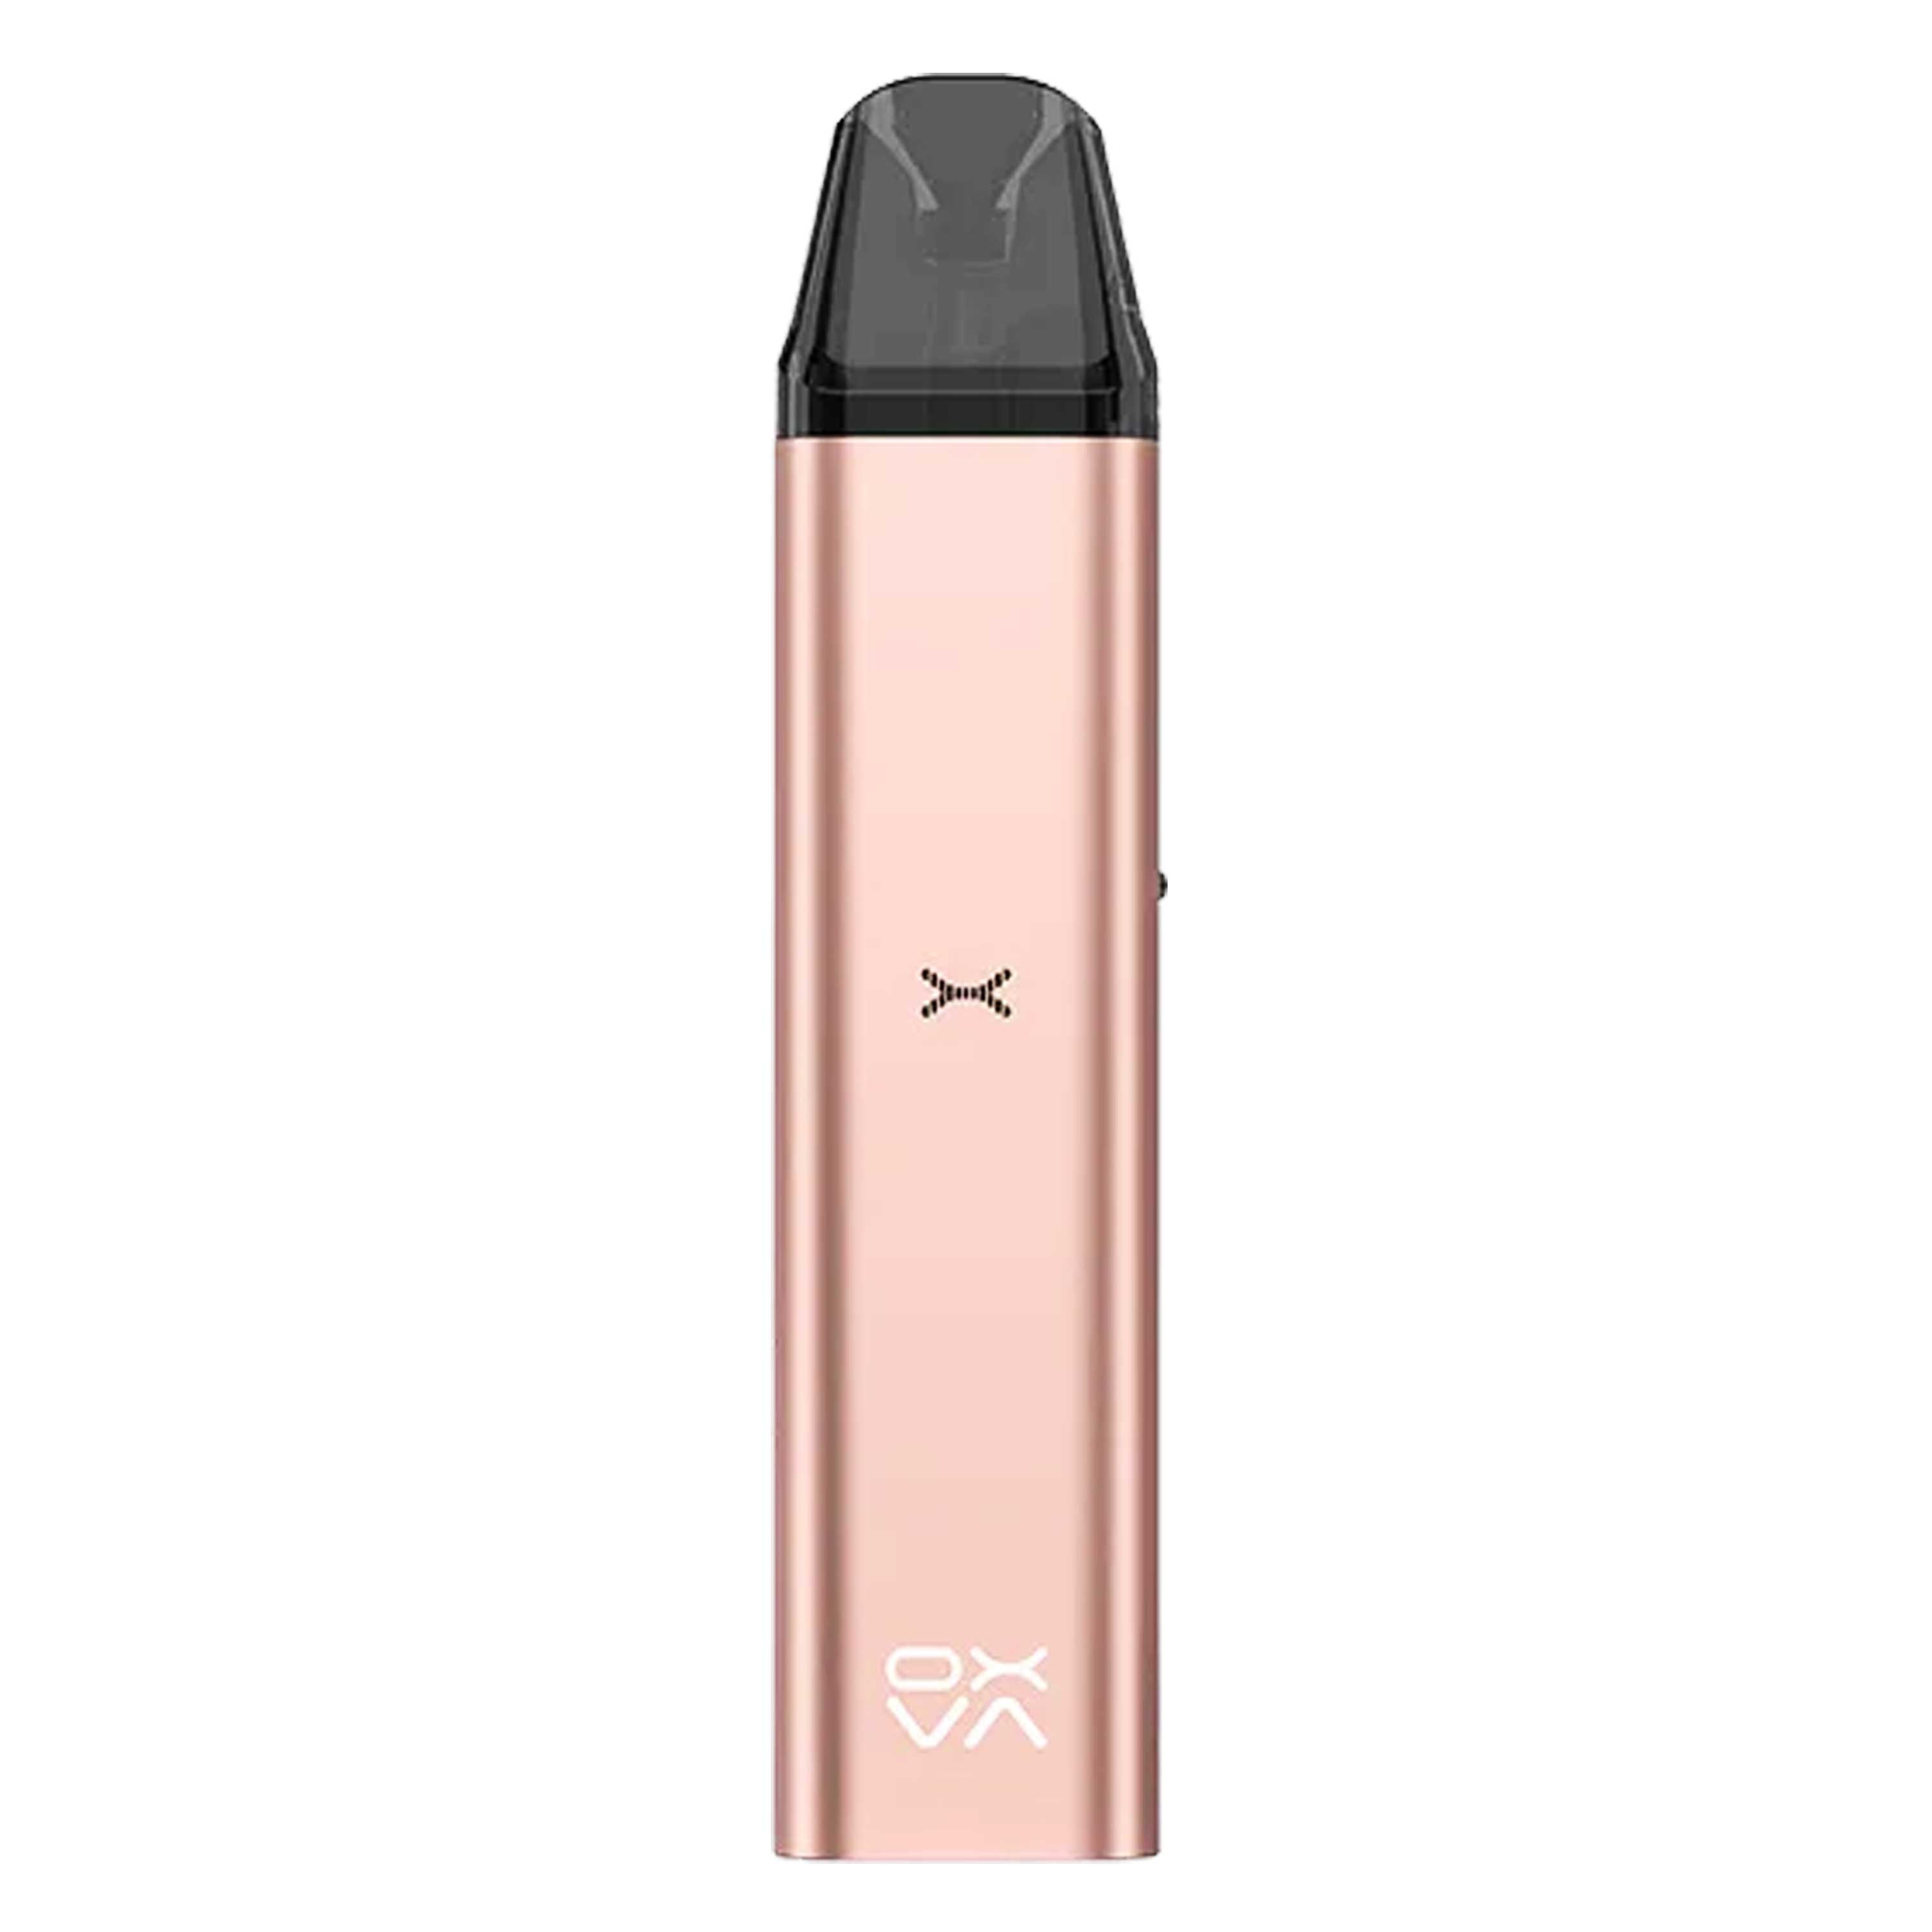 OXVA - Xlim SE Kit (2 ml) 900 mAh - E-Zigarette